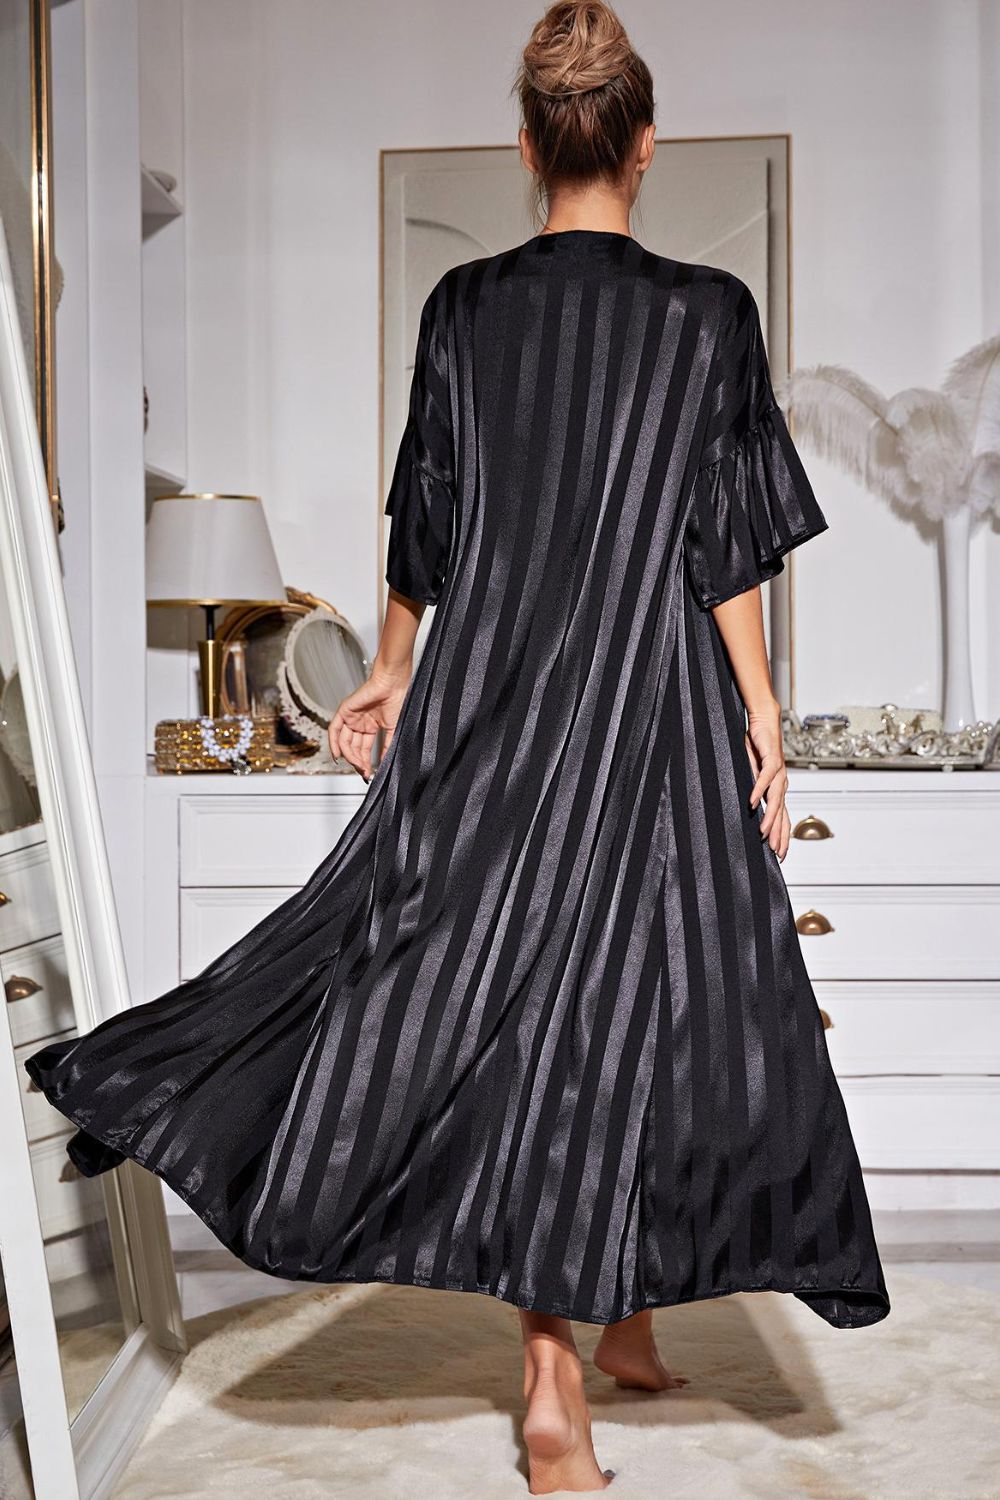 Striped Flounce Sleeve Open Front Robe and Cami Dress Set - Shah S. Sahota